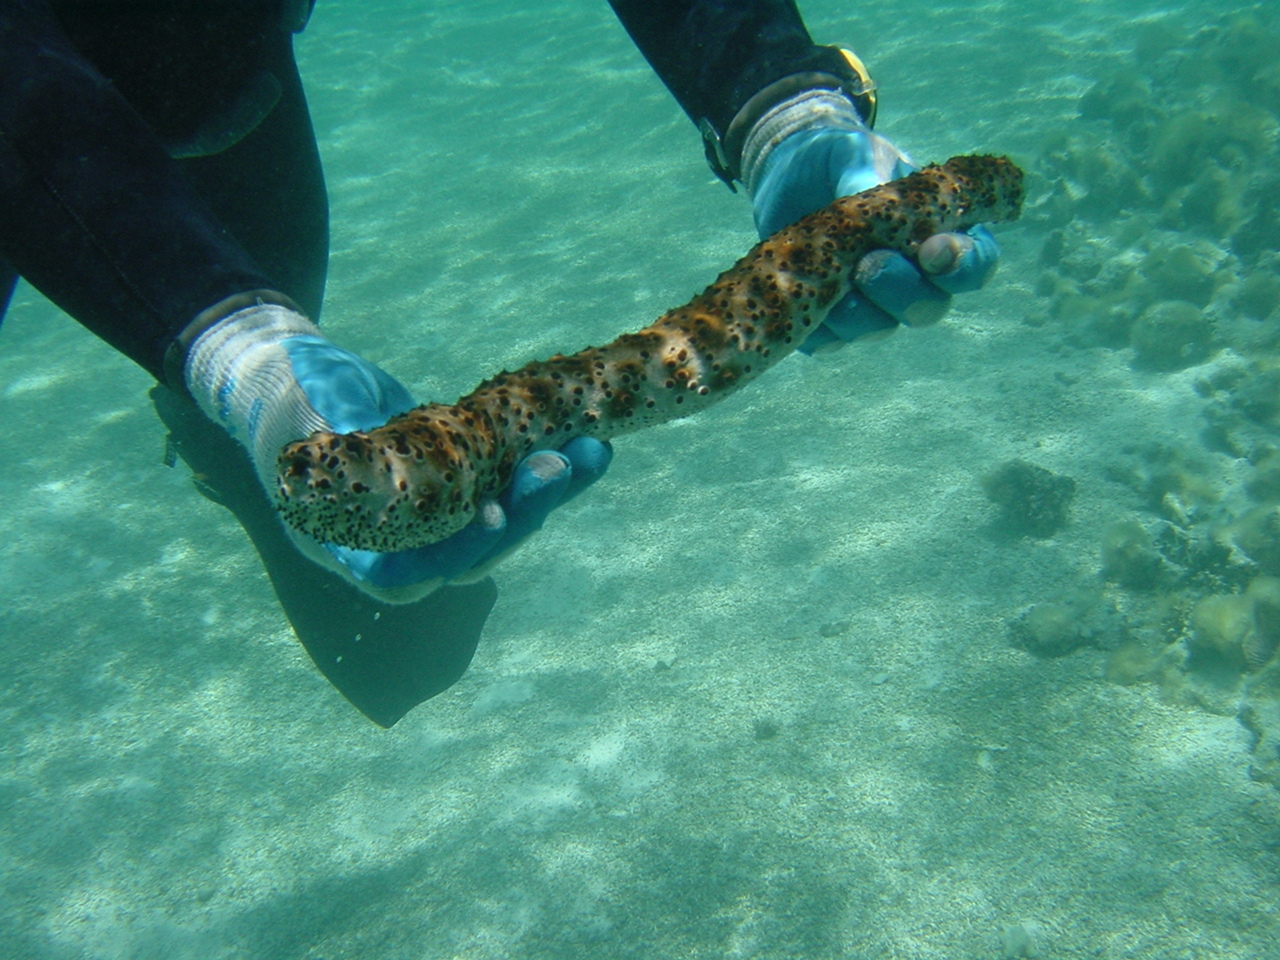 A holothurian - black-spotted sea cucumber (Holothuria sp